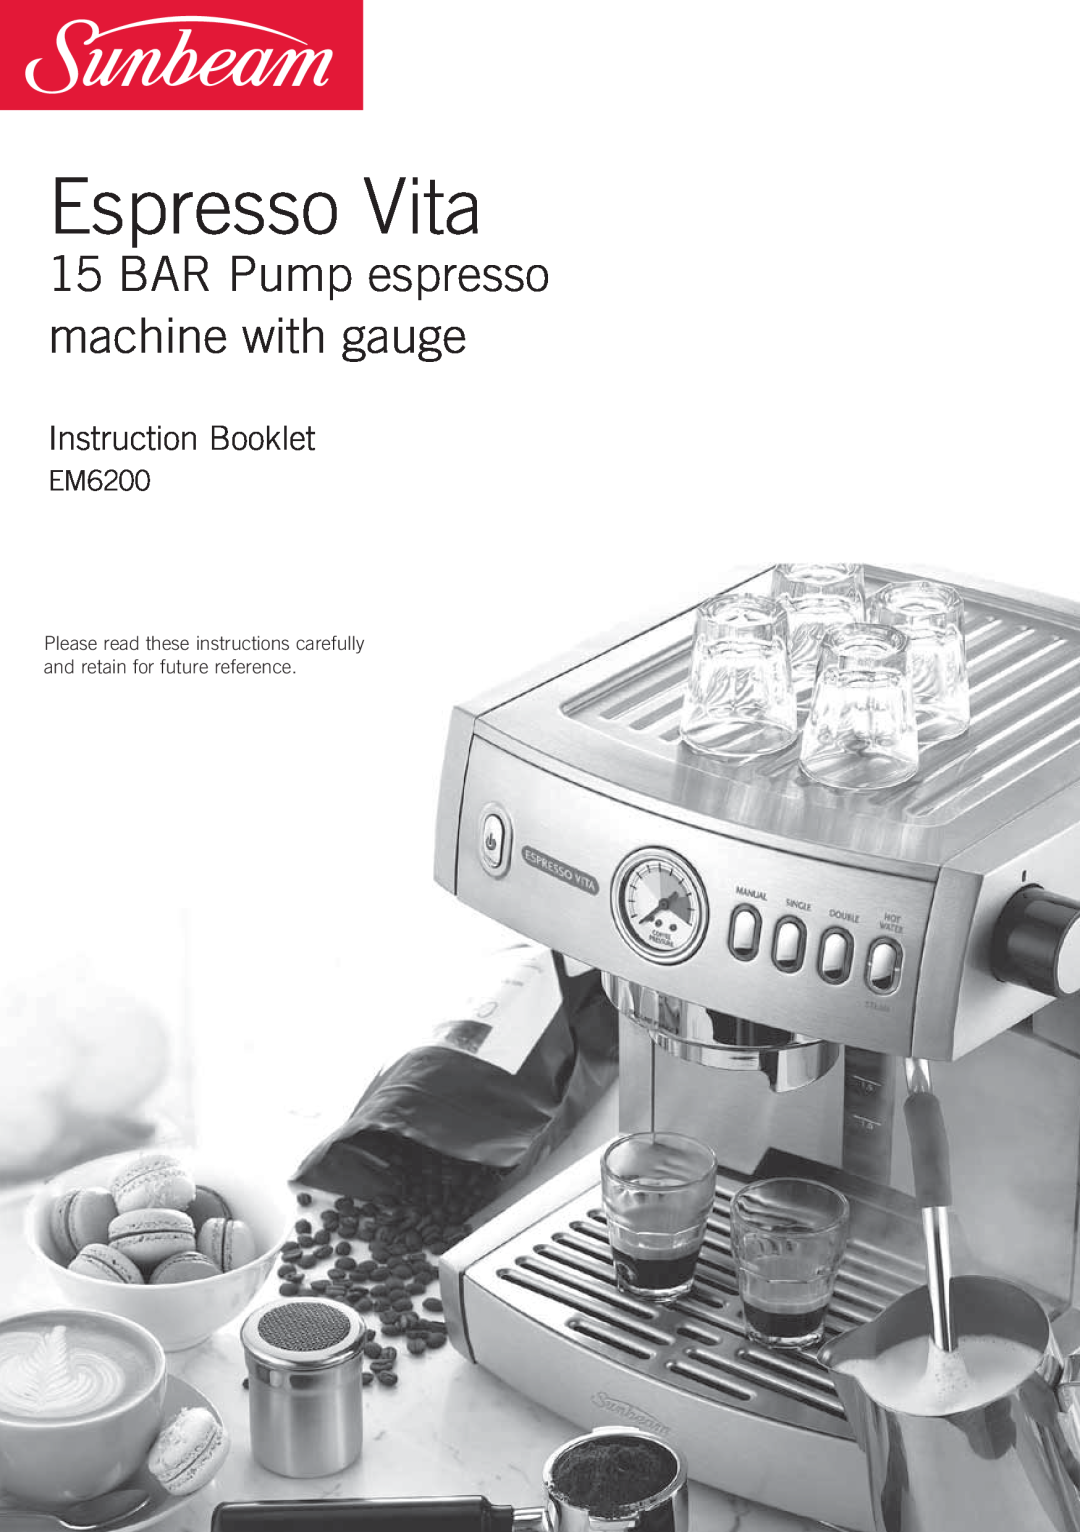 Sunbeam EM6200 manual Espresso Vita, BAR Pump espresso machine with gauge, Instruction Booklet 